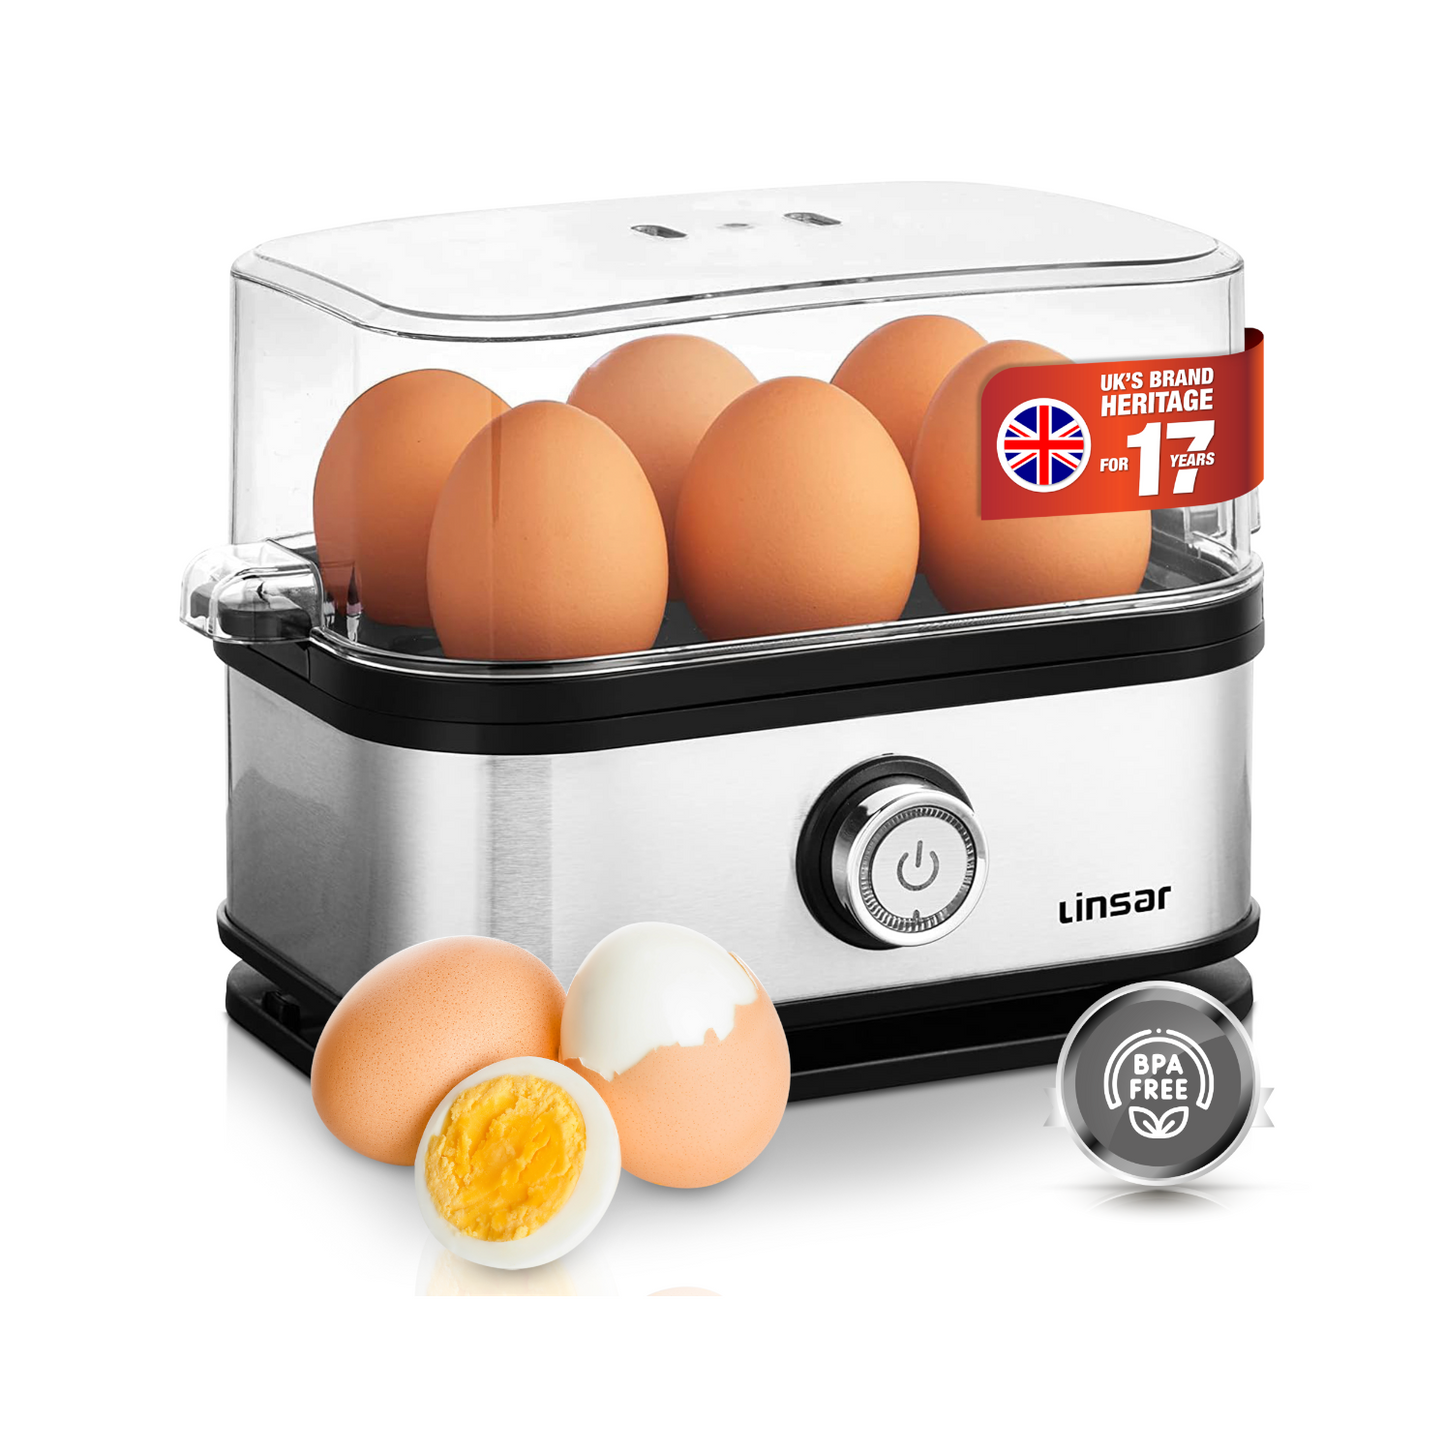 Linsar brand egg cooker